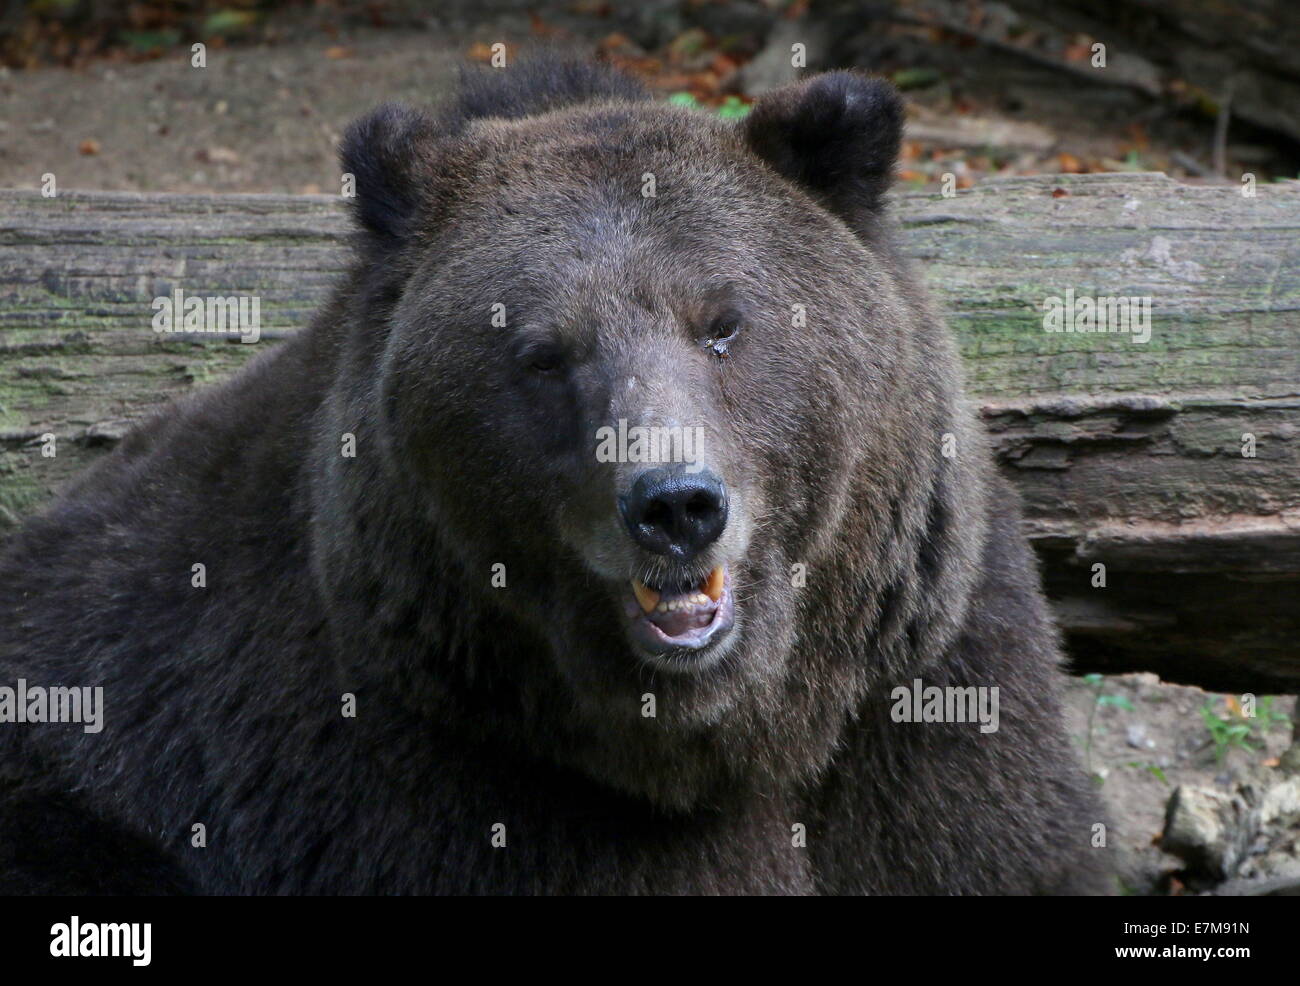 Close-up di un Eurasian l'orso bruno (Ursus arctos) nella vasta foresta orso (Berenbos) di zoo Ouwehands, Rhenen, Paesi Bassi Foto Stock